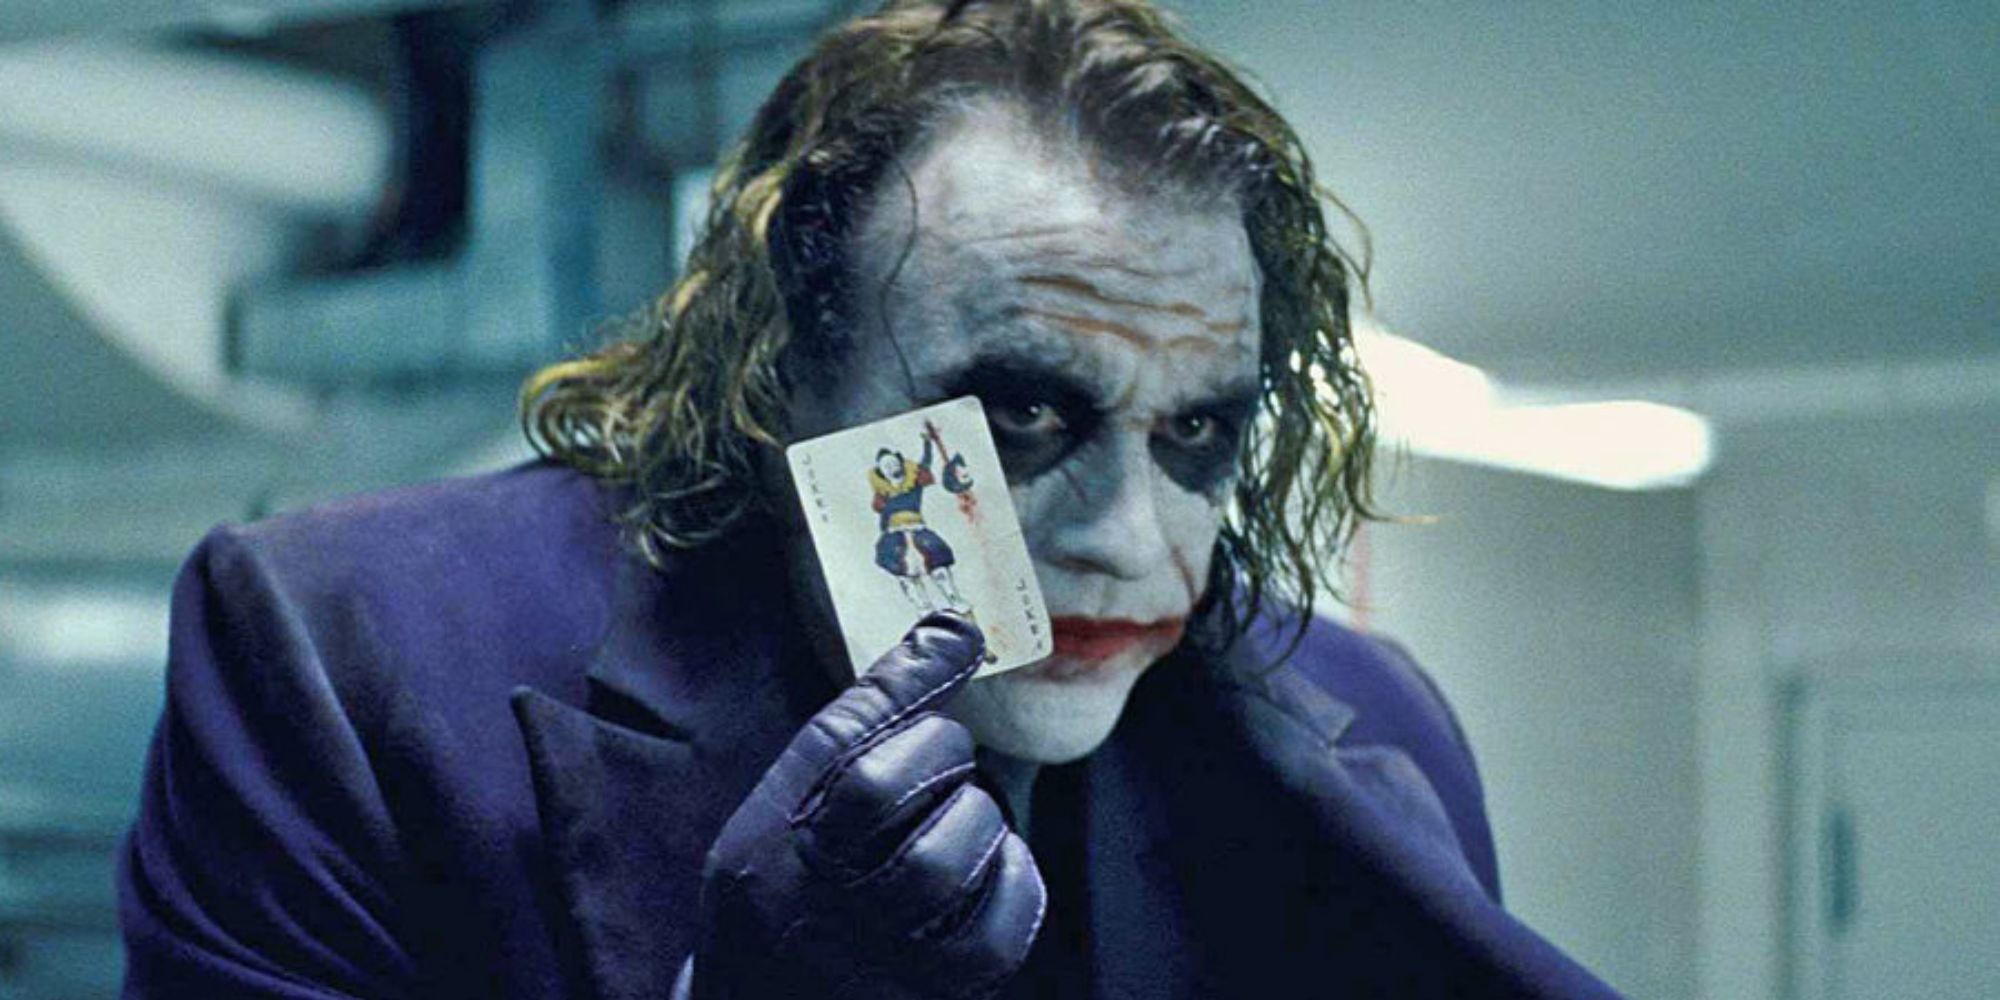 The Joker raising a card in The Dark Knight.